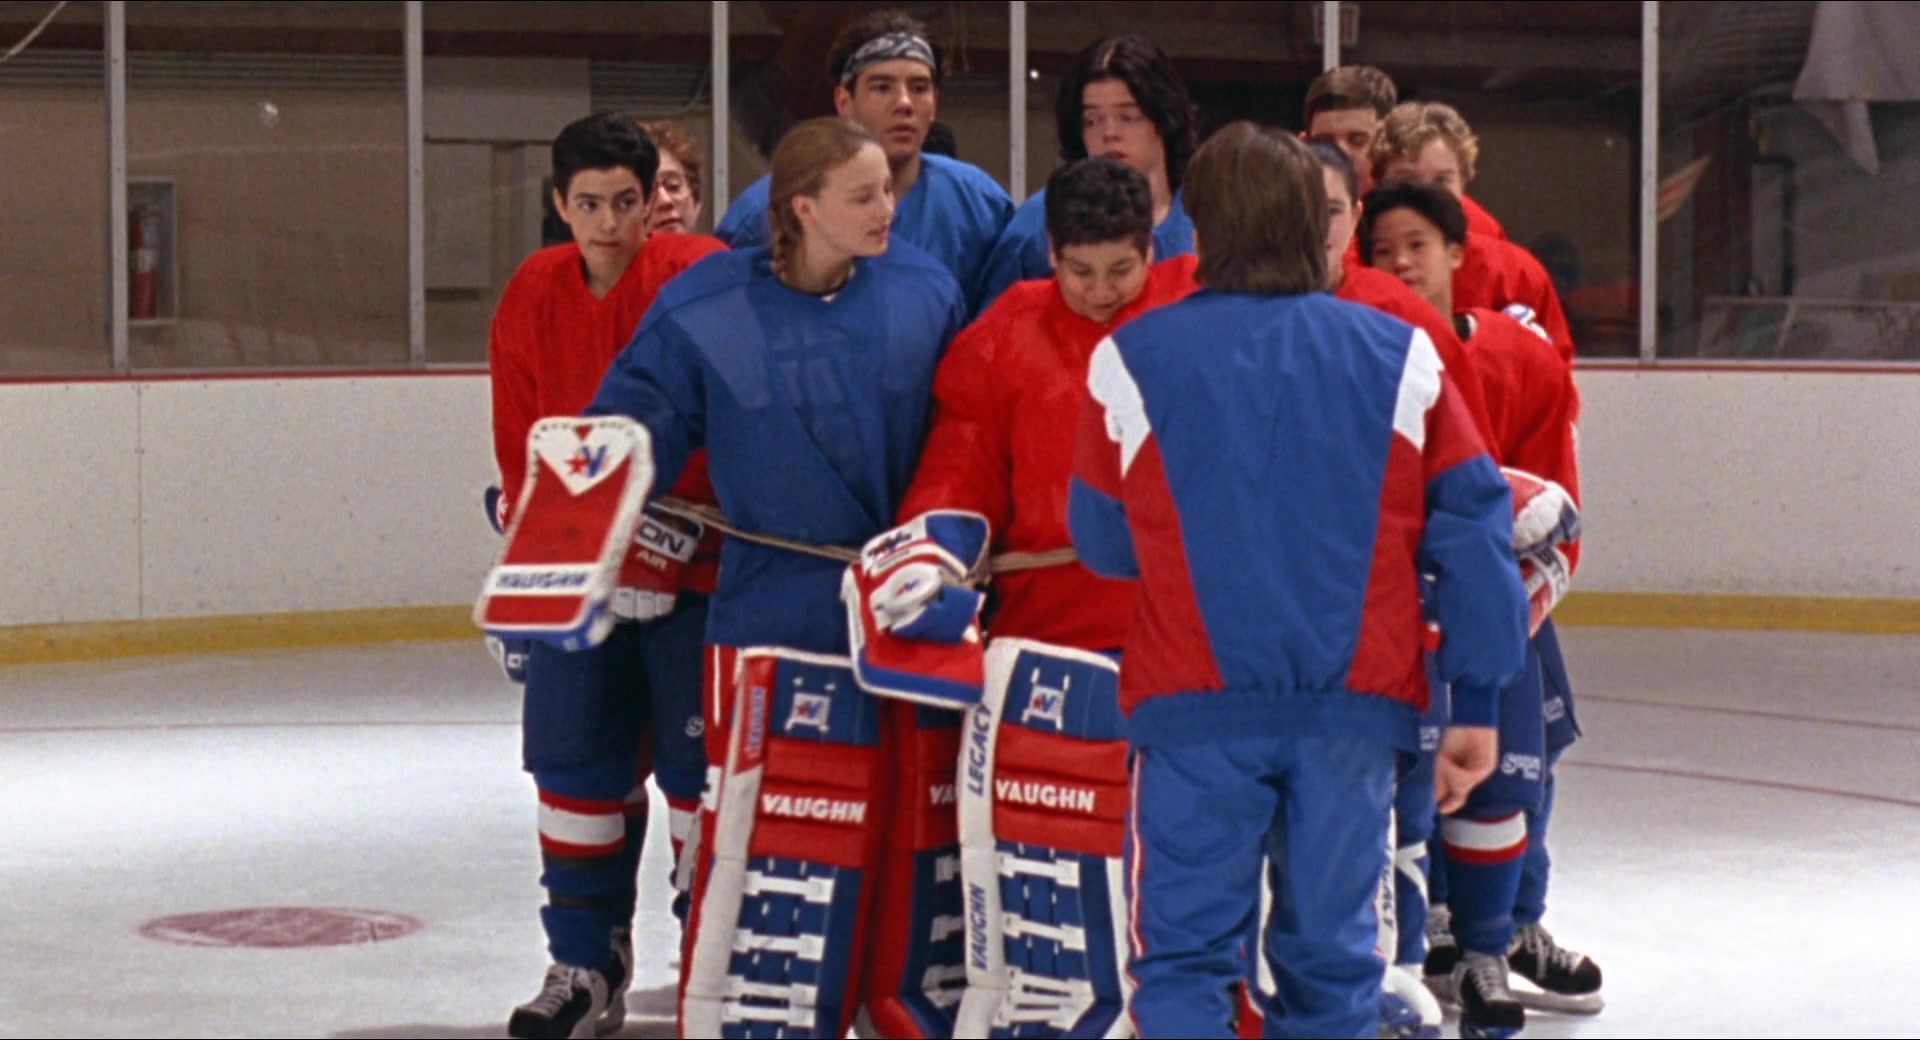 Vaughn Hockey Goalie Equipment In D2: The Mighty Ducks (1994)